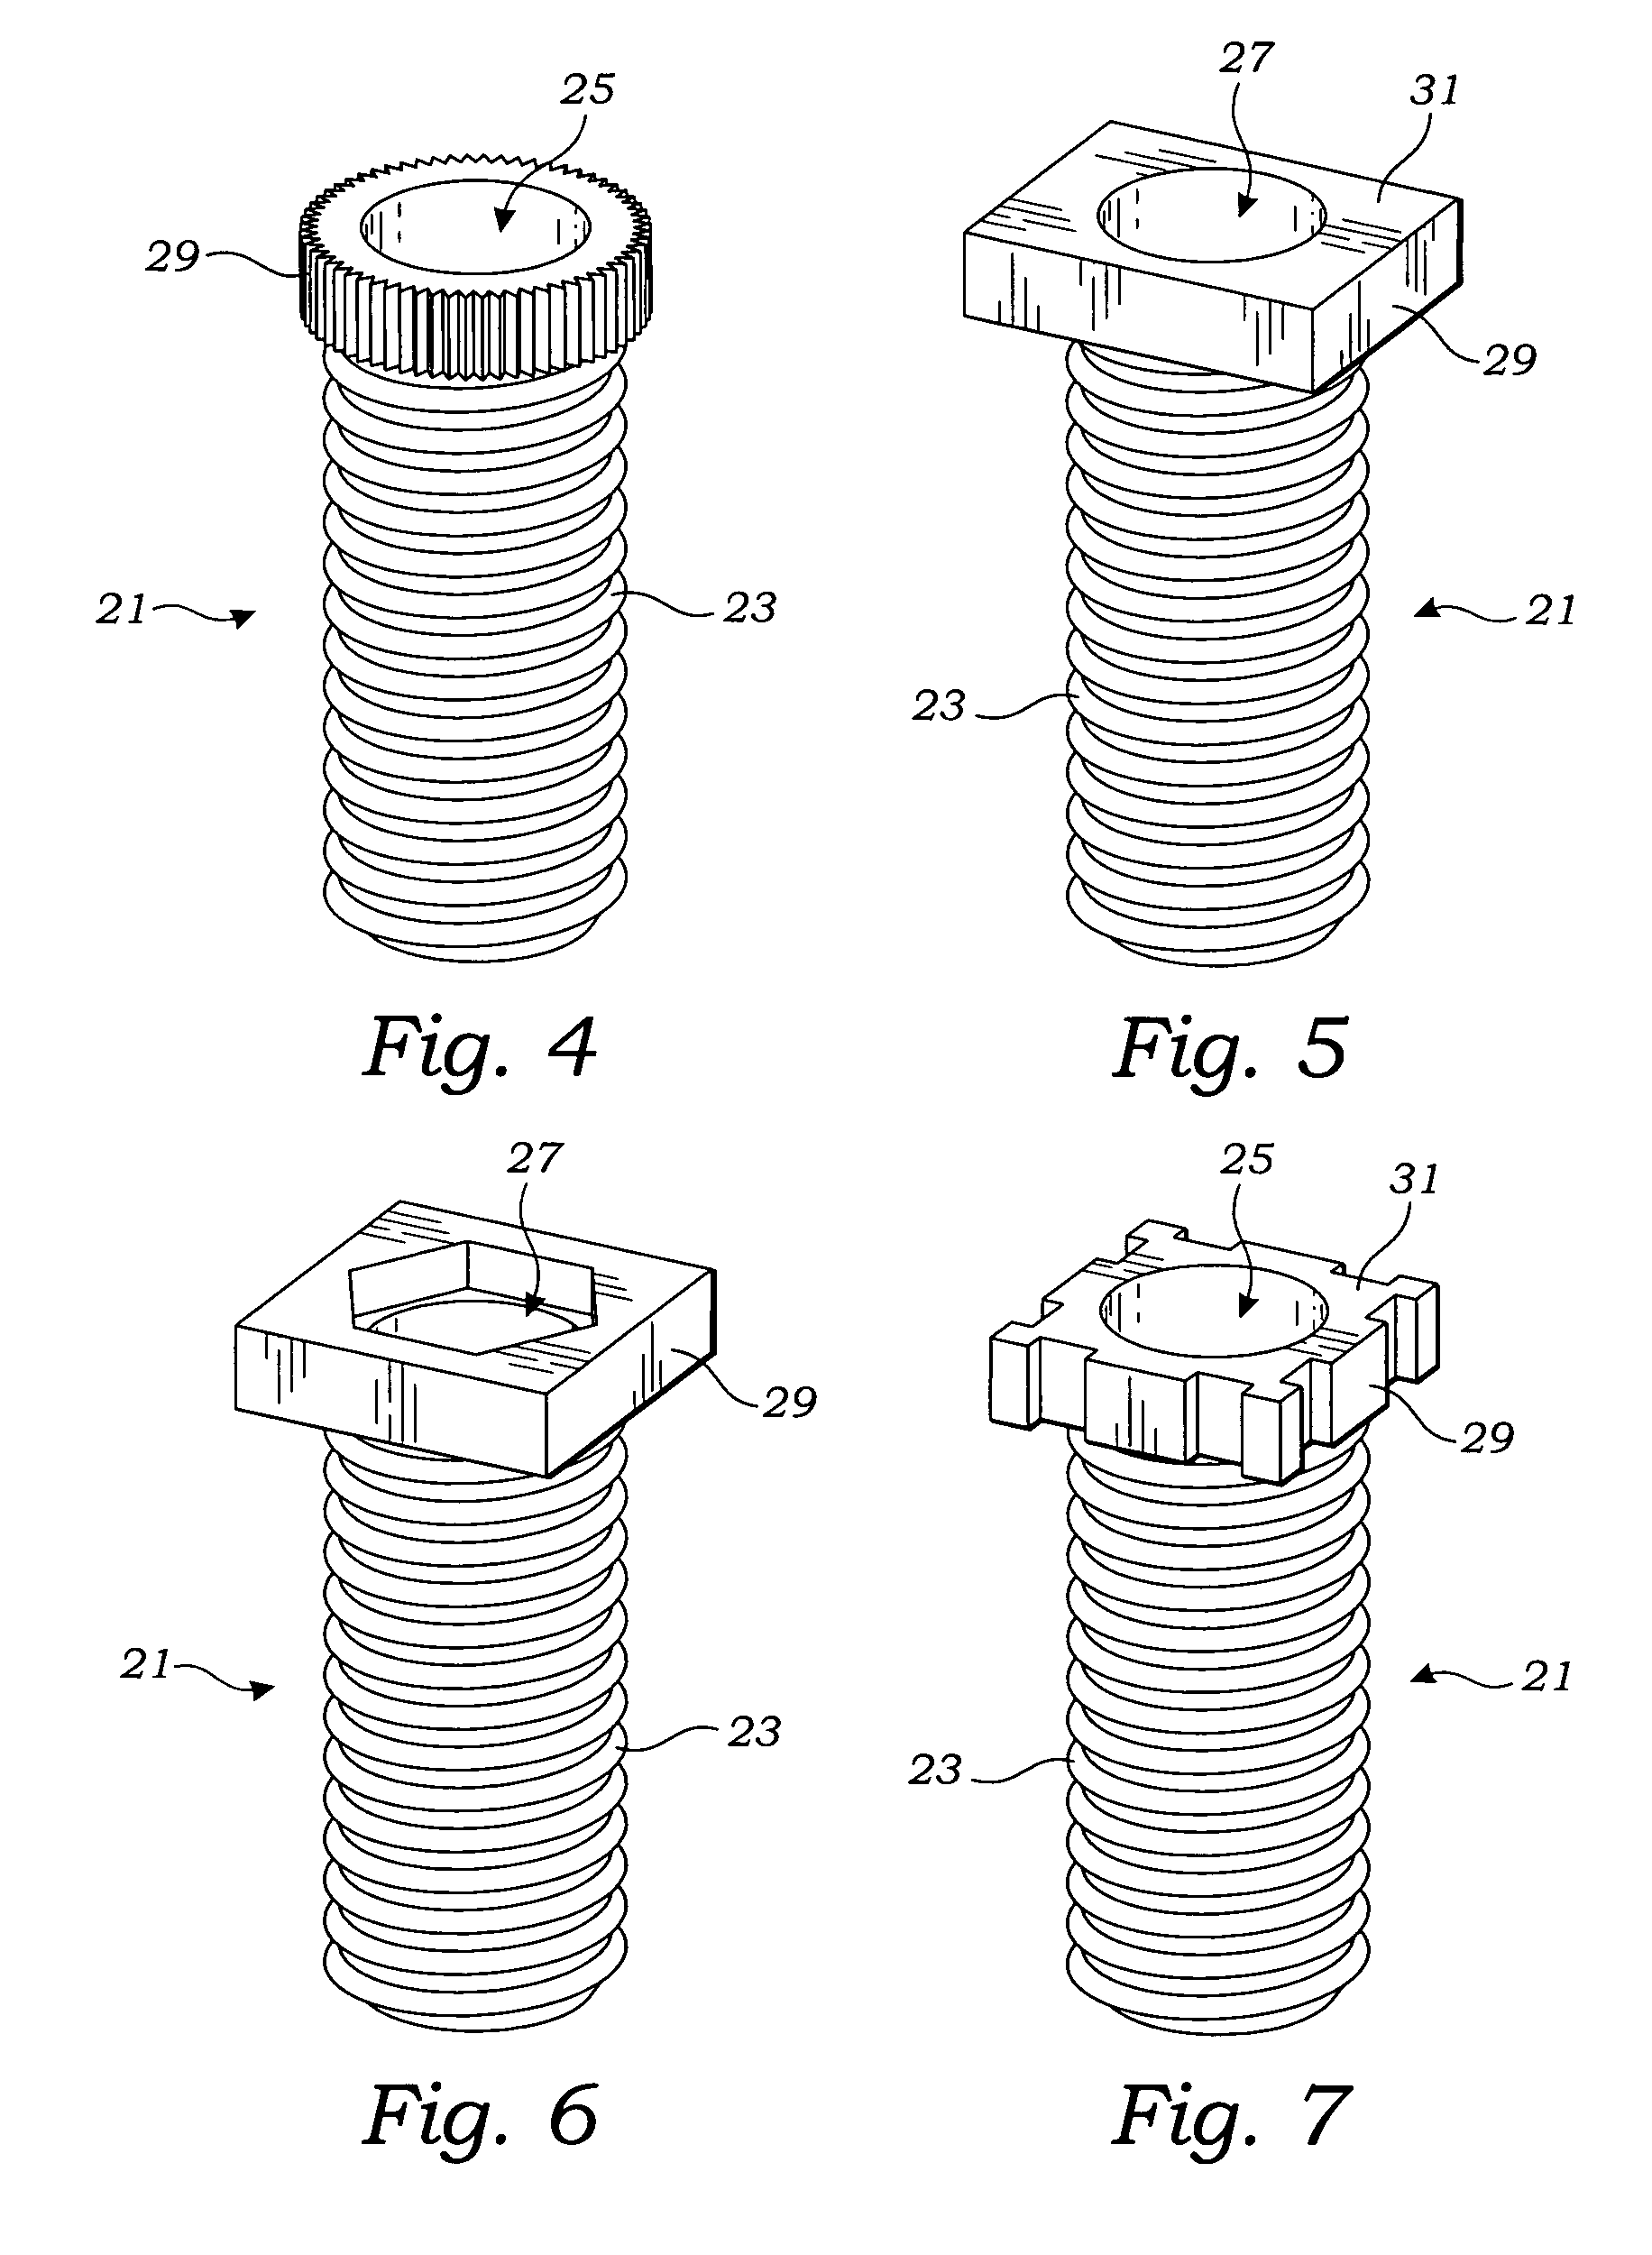 Hybrid composite-metal male fastener